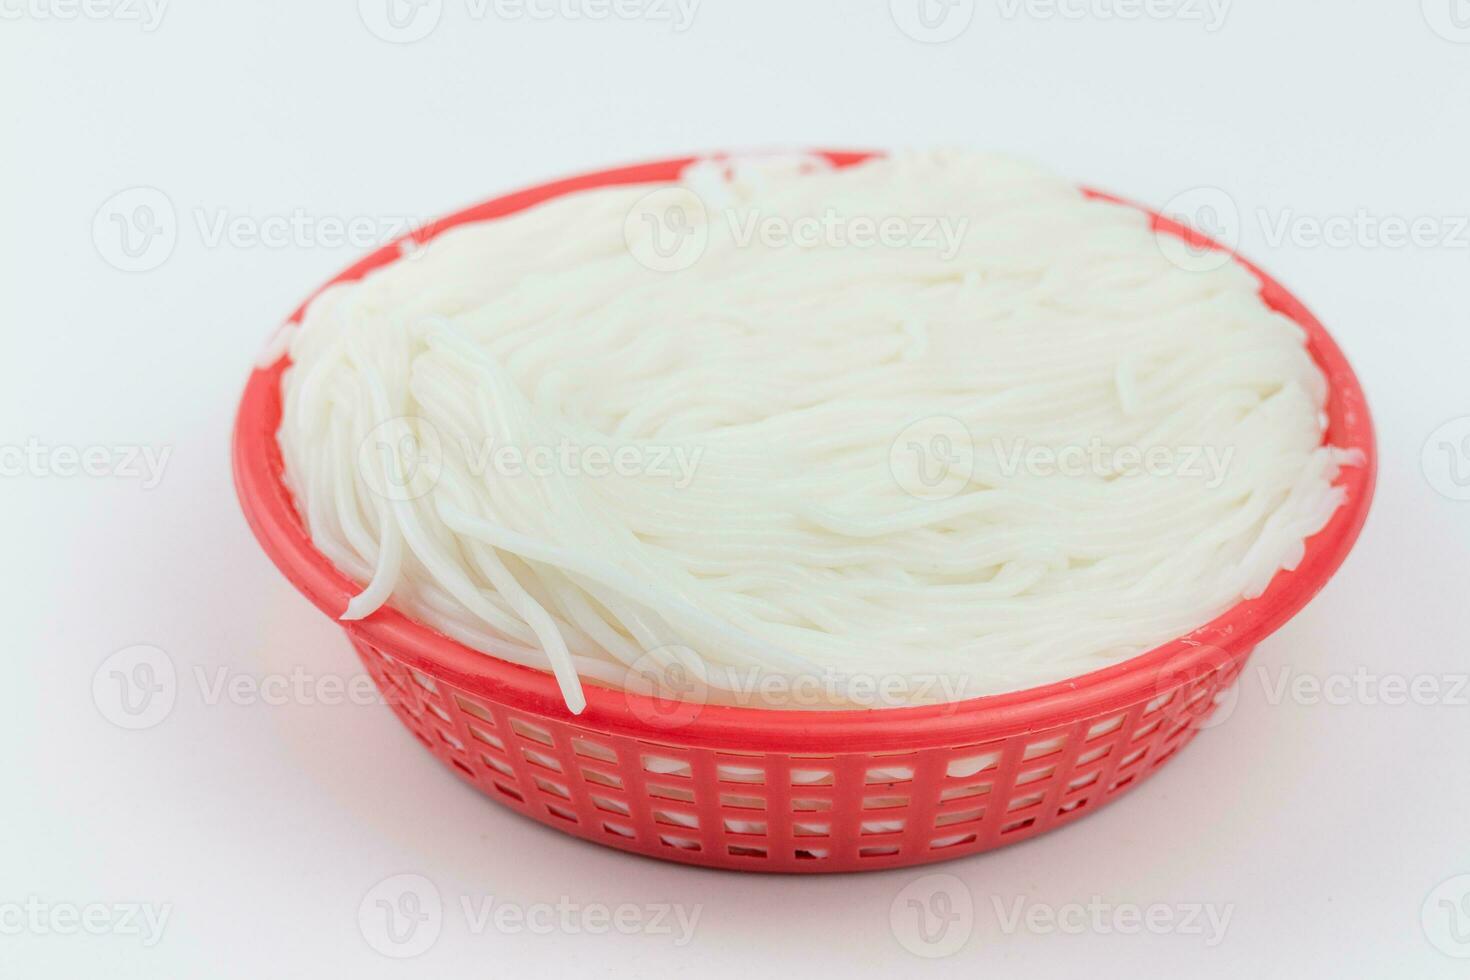 ris spaghetti i röd plast korg på vit bakgrund, thailand. foto